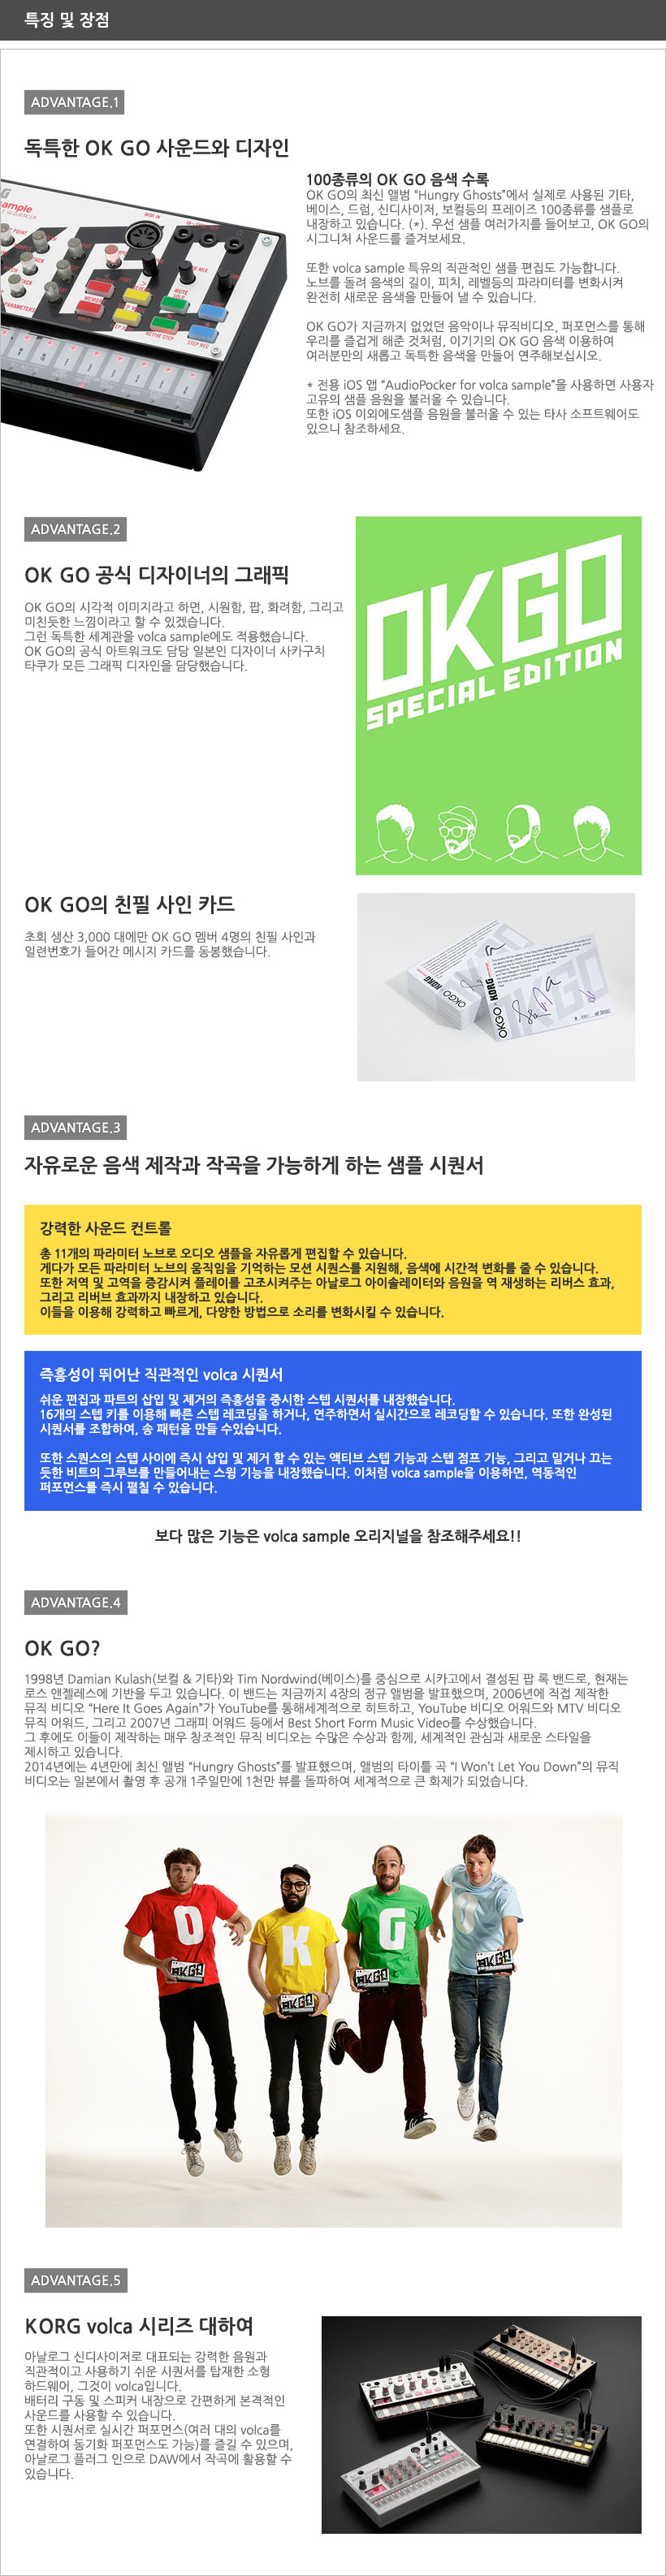 volca sample OK GO edition 특징 및 장점